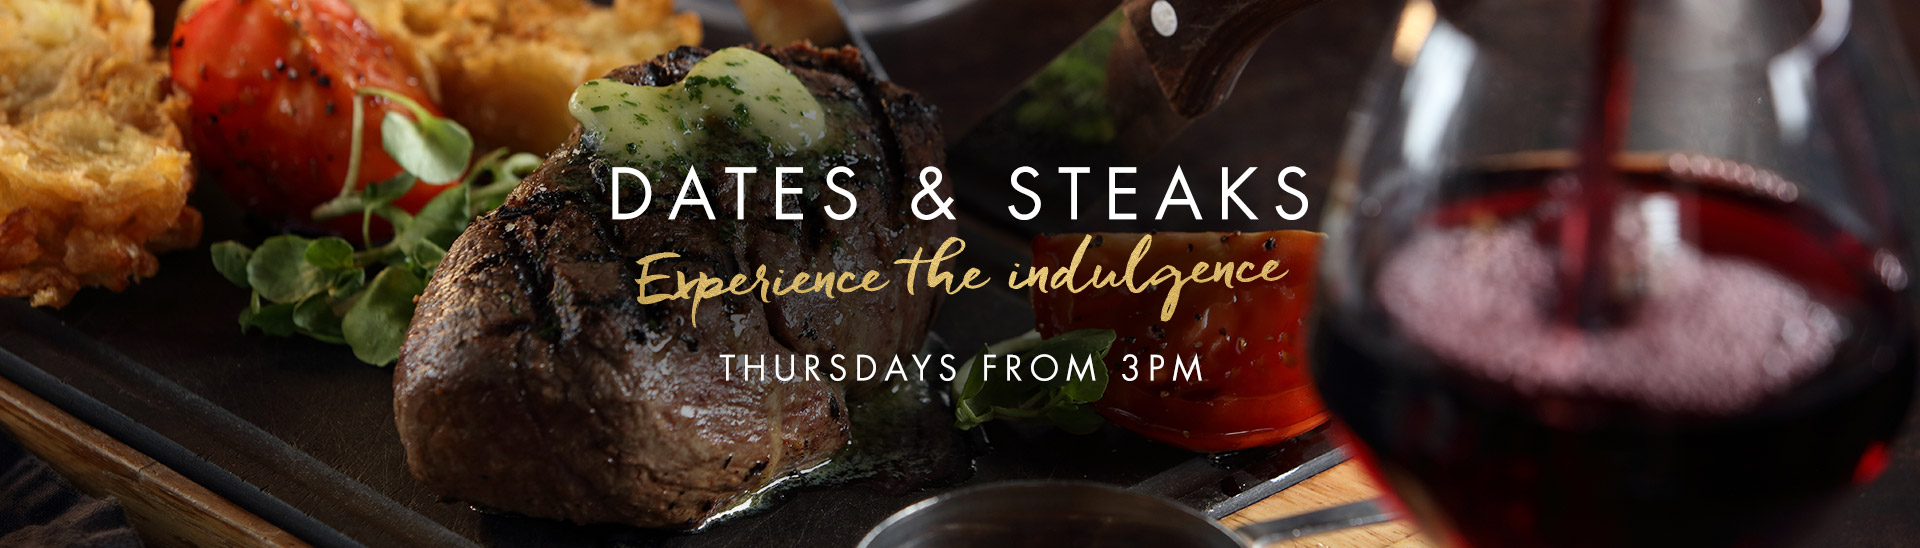 Dates & Steaks at Miller & Carter Stratford-upon-Avon